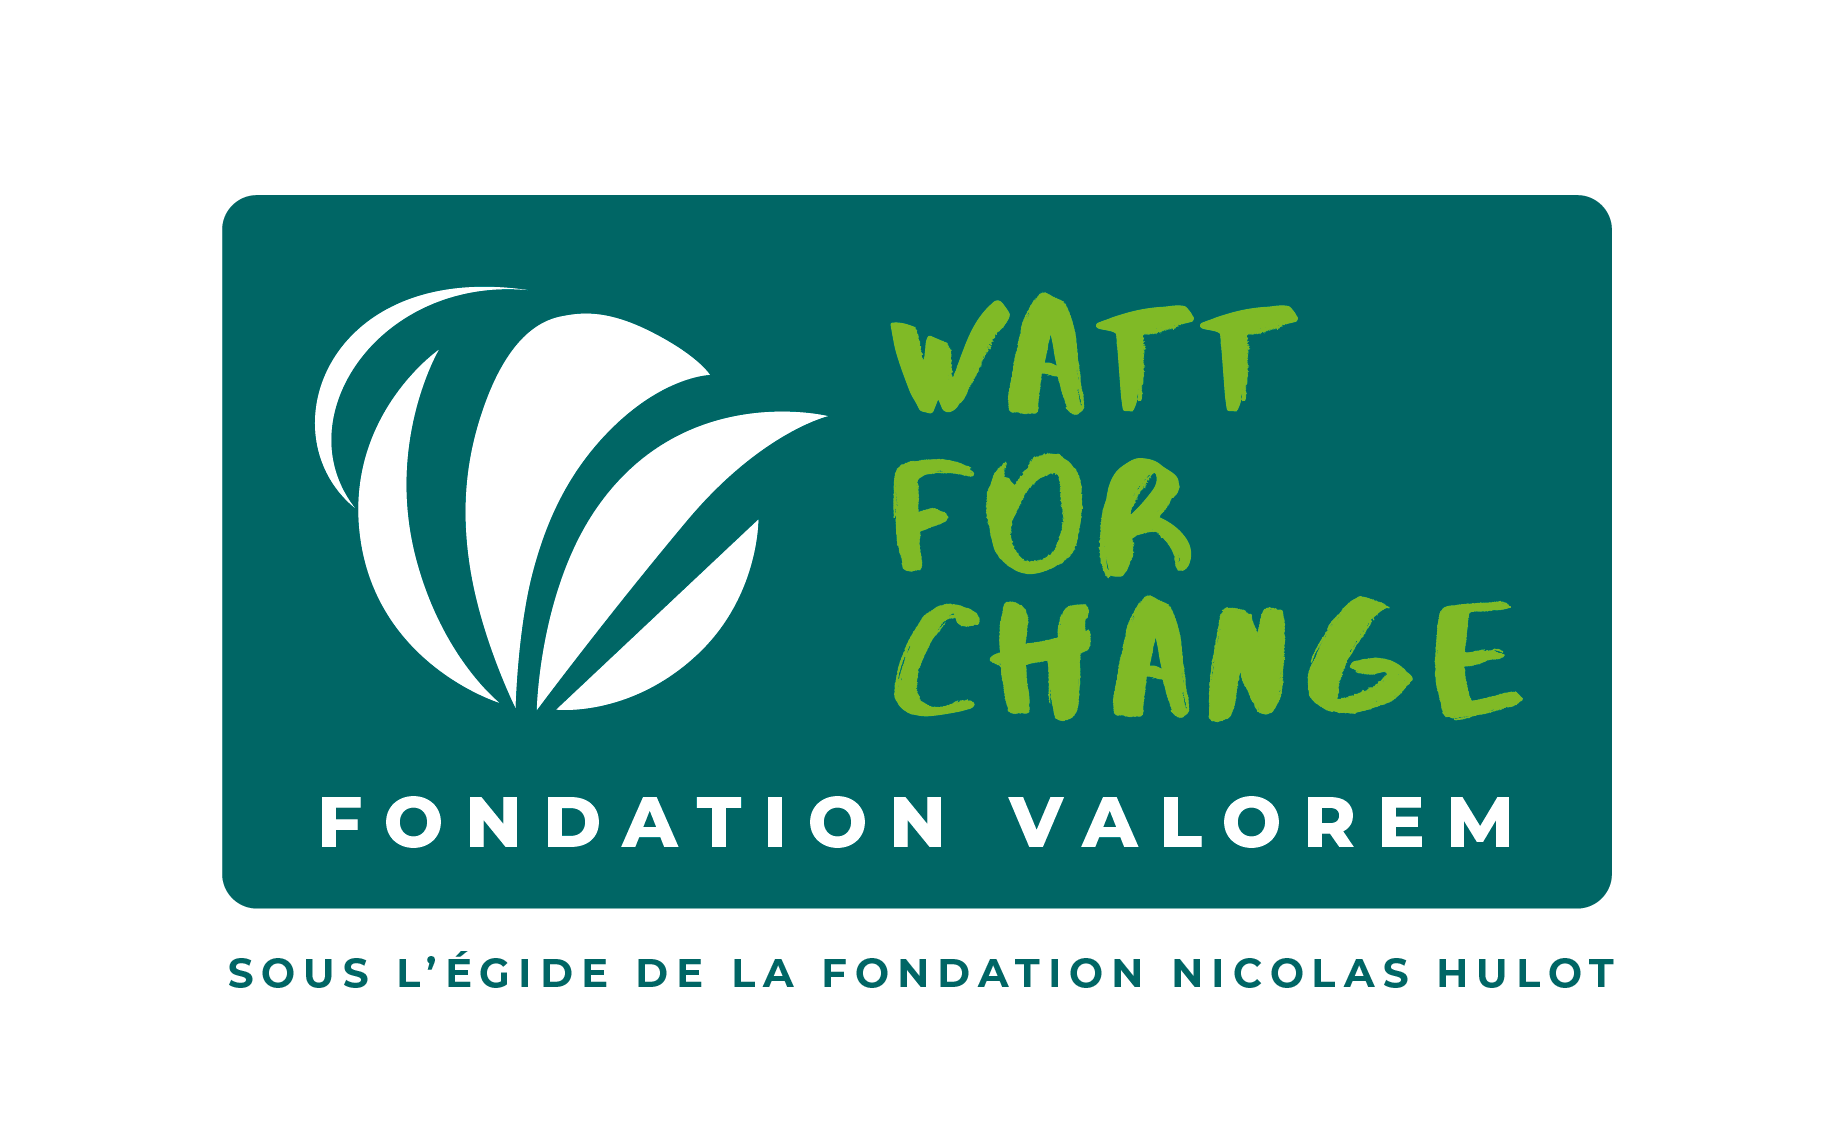 Fondation Valorem Watt for Change